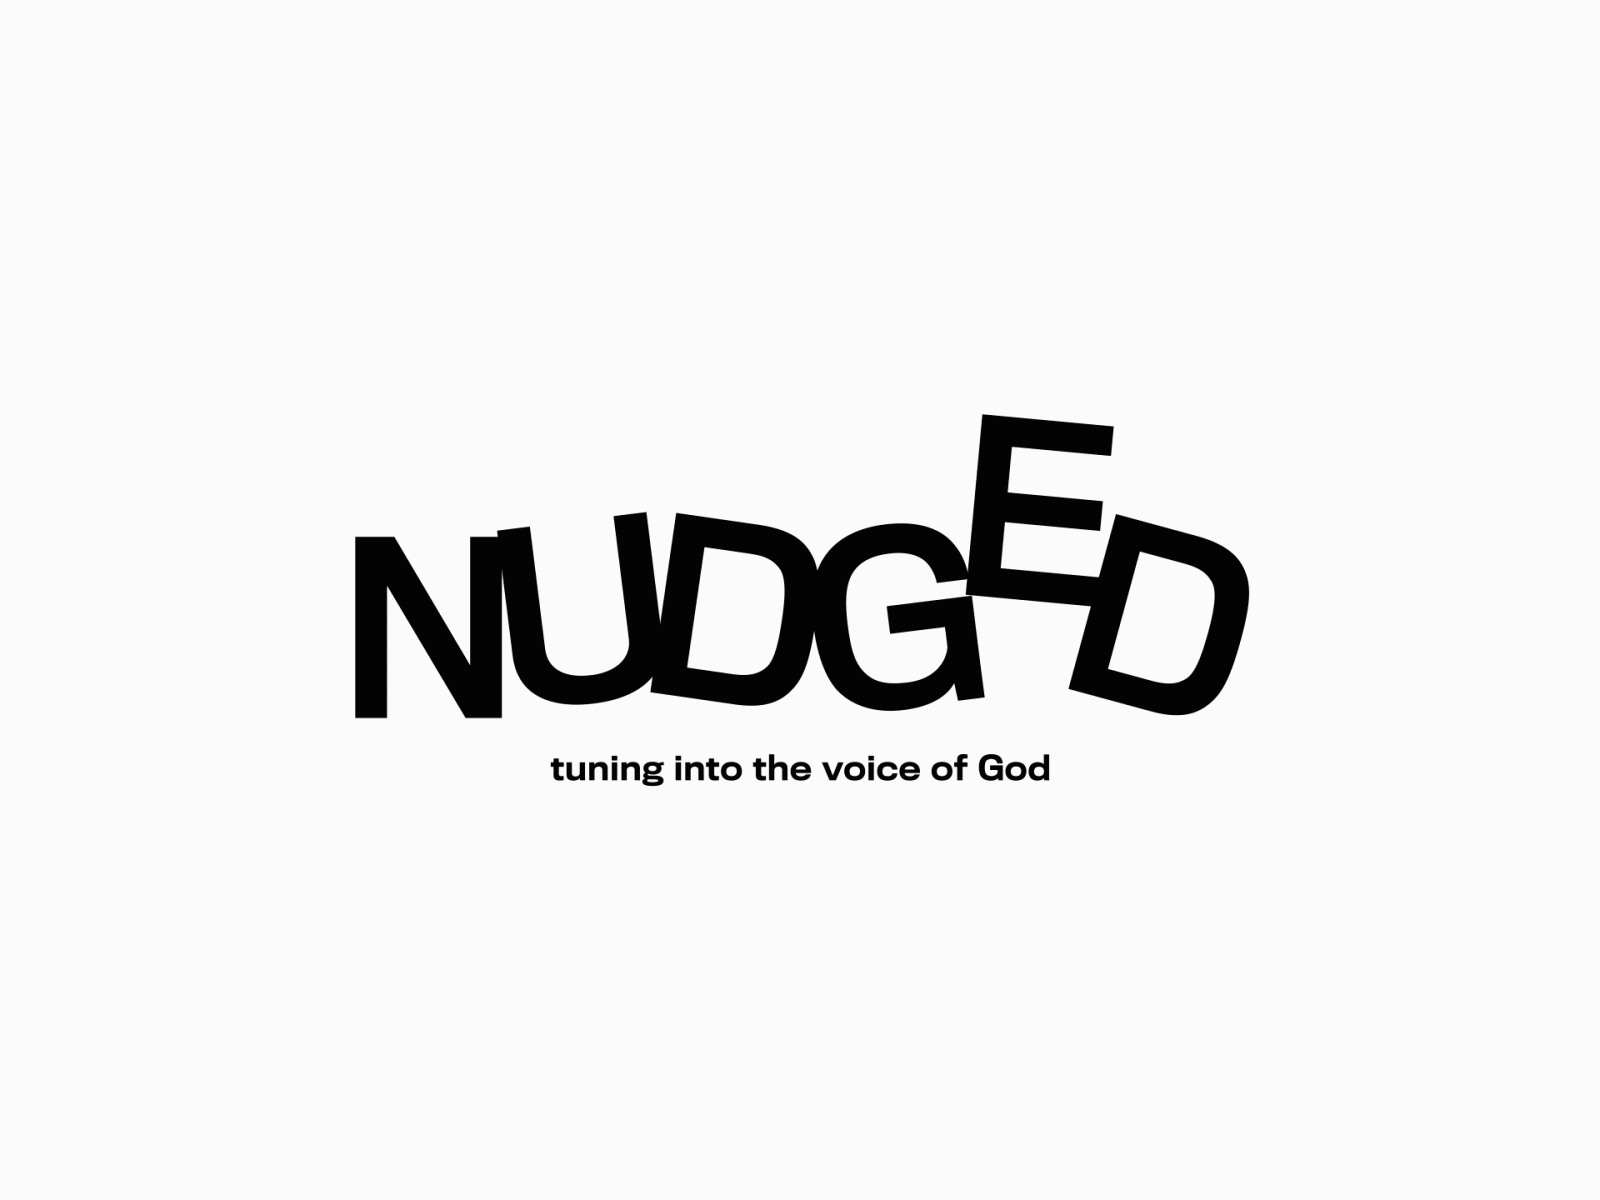 "Nudged" Logo Animation